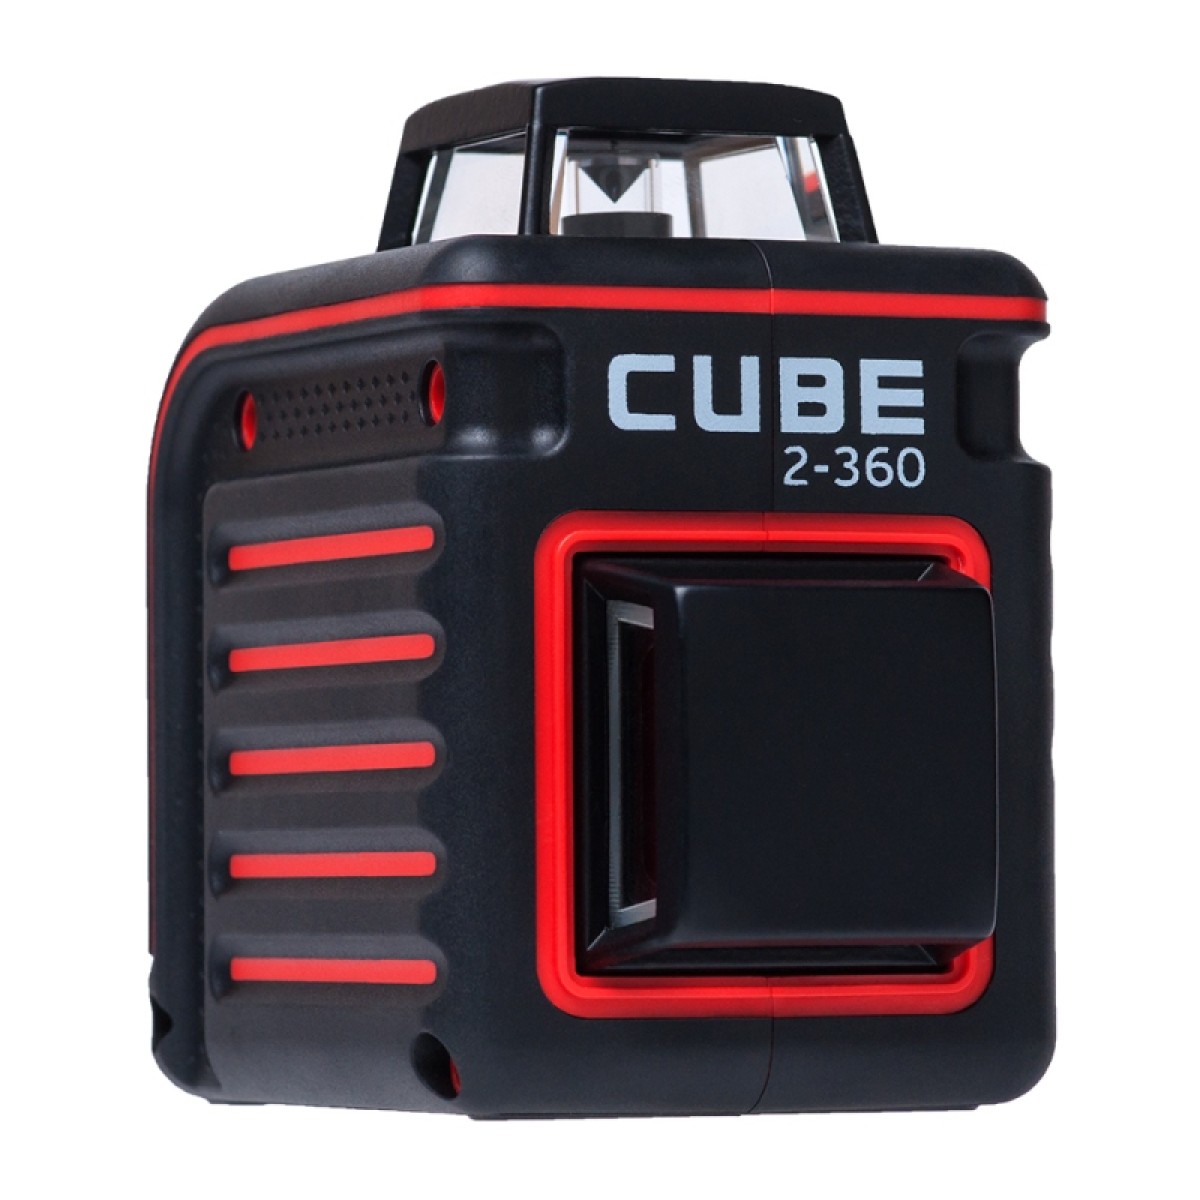 Cube 360 basic edition. Лазерный уровень ada Cube 360. Лазерный уровень ada Cube 2-360. Ada instruments Cube 2-360 Basic Edition. Ada Cube 2-360 professional Edition а00449.